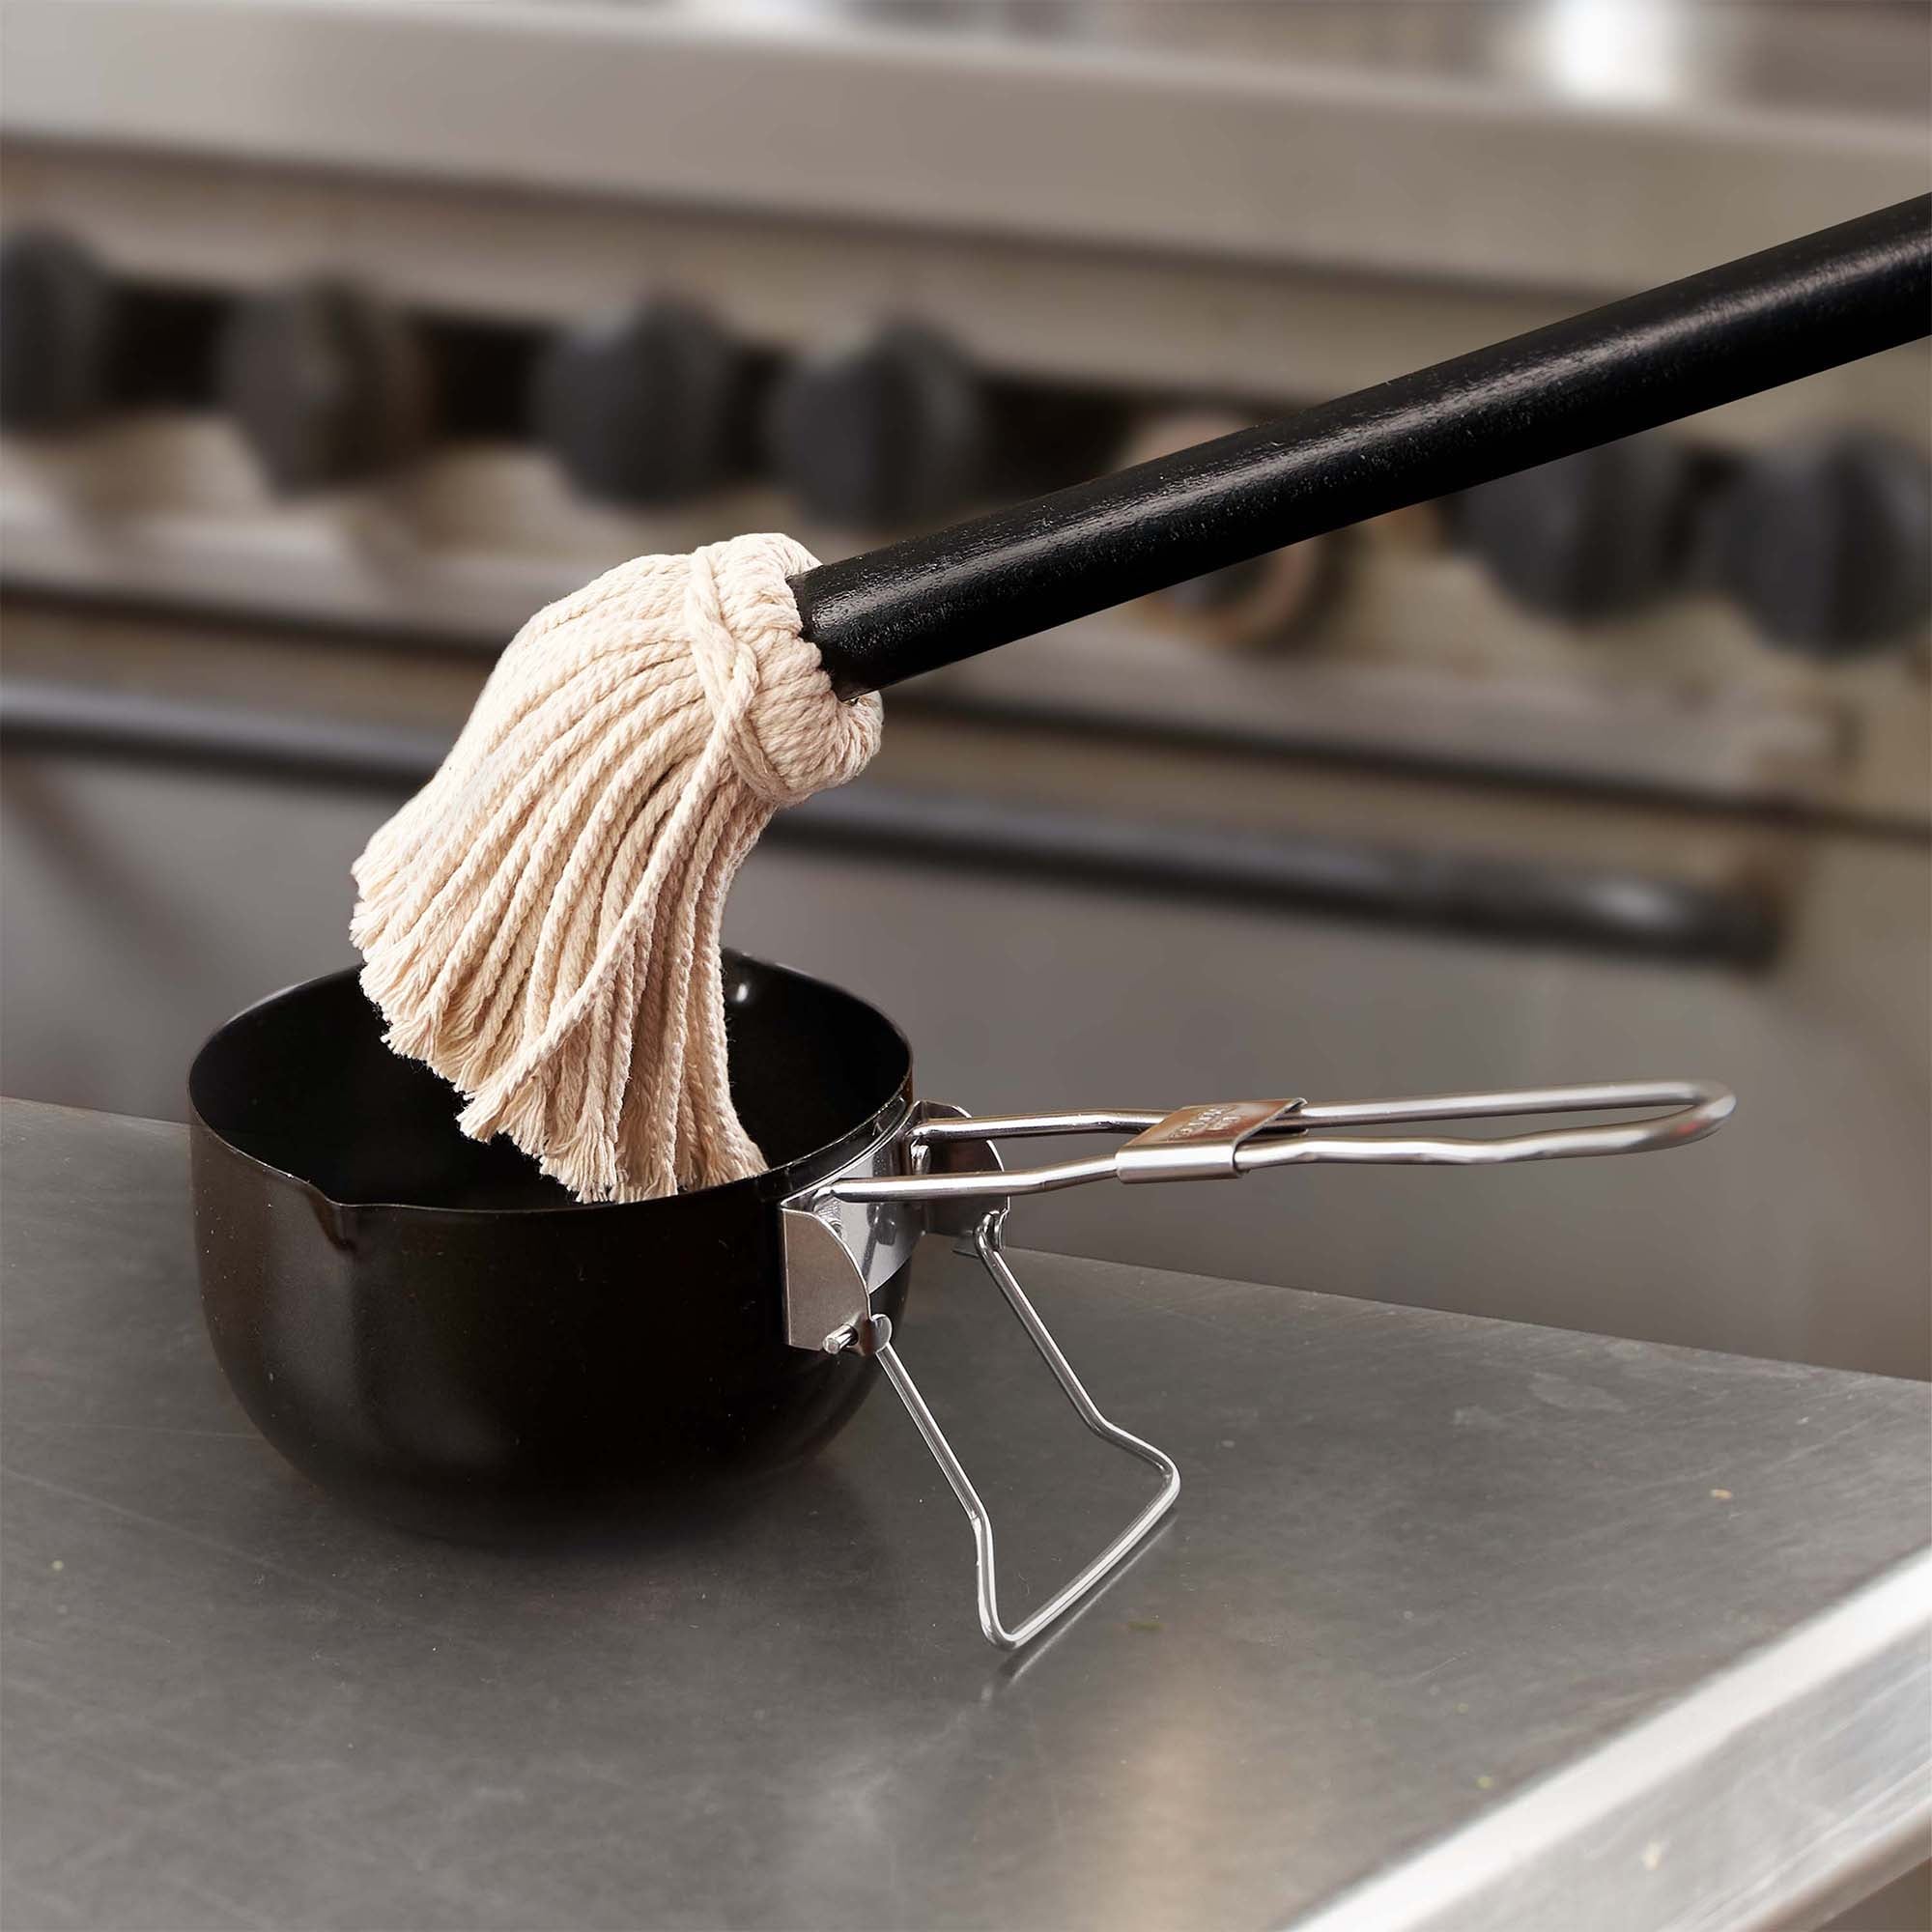 Cuisinart Chefs Classic Pro Silicone Basting Brush